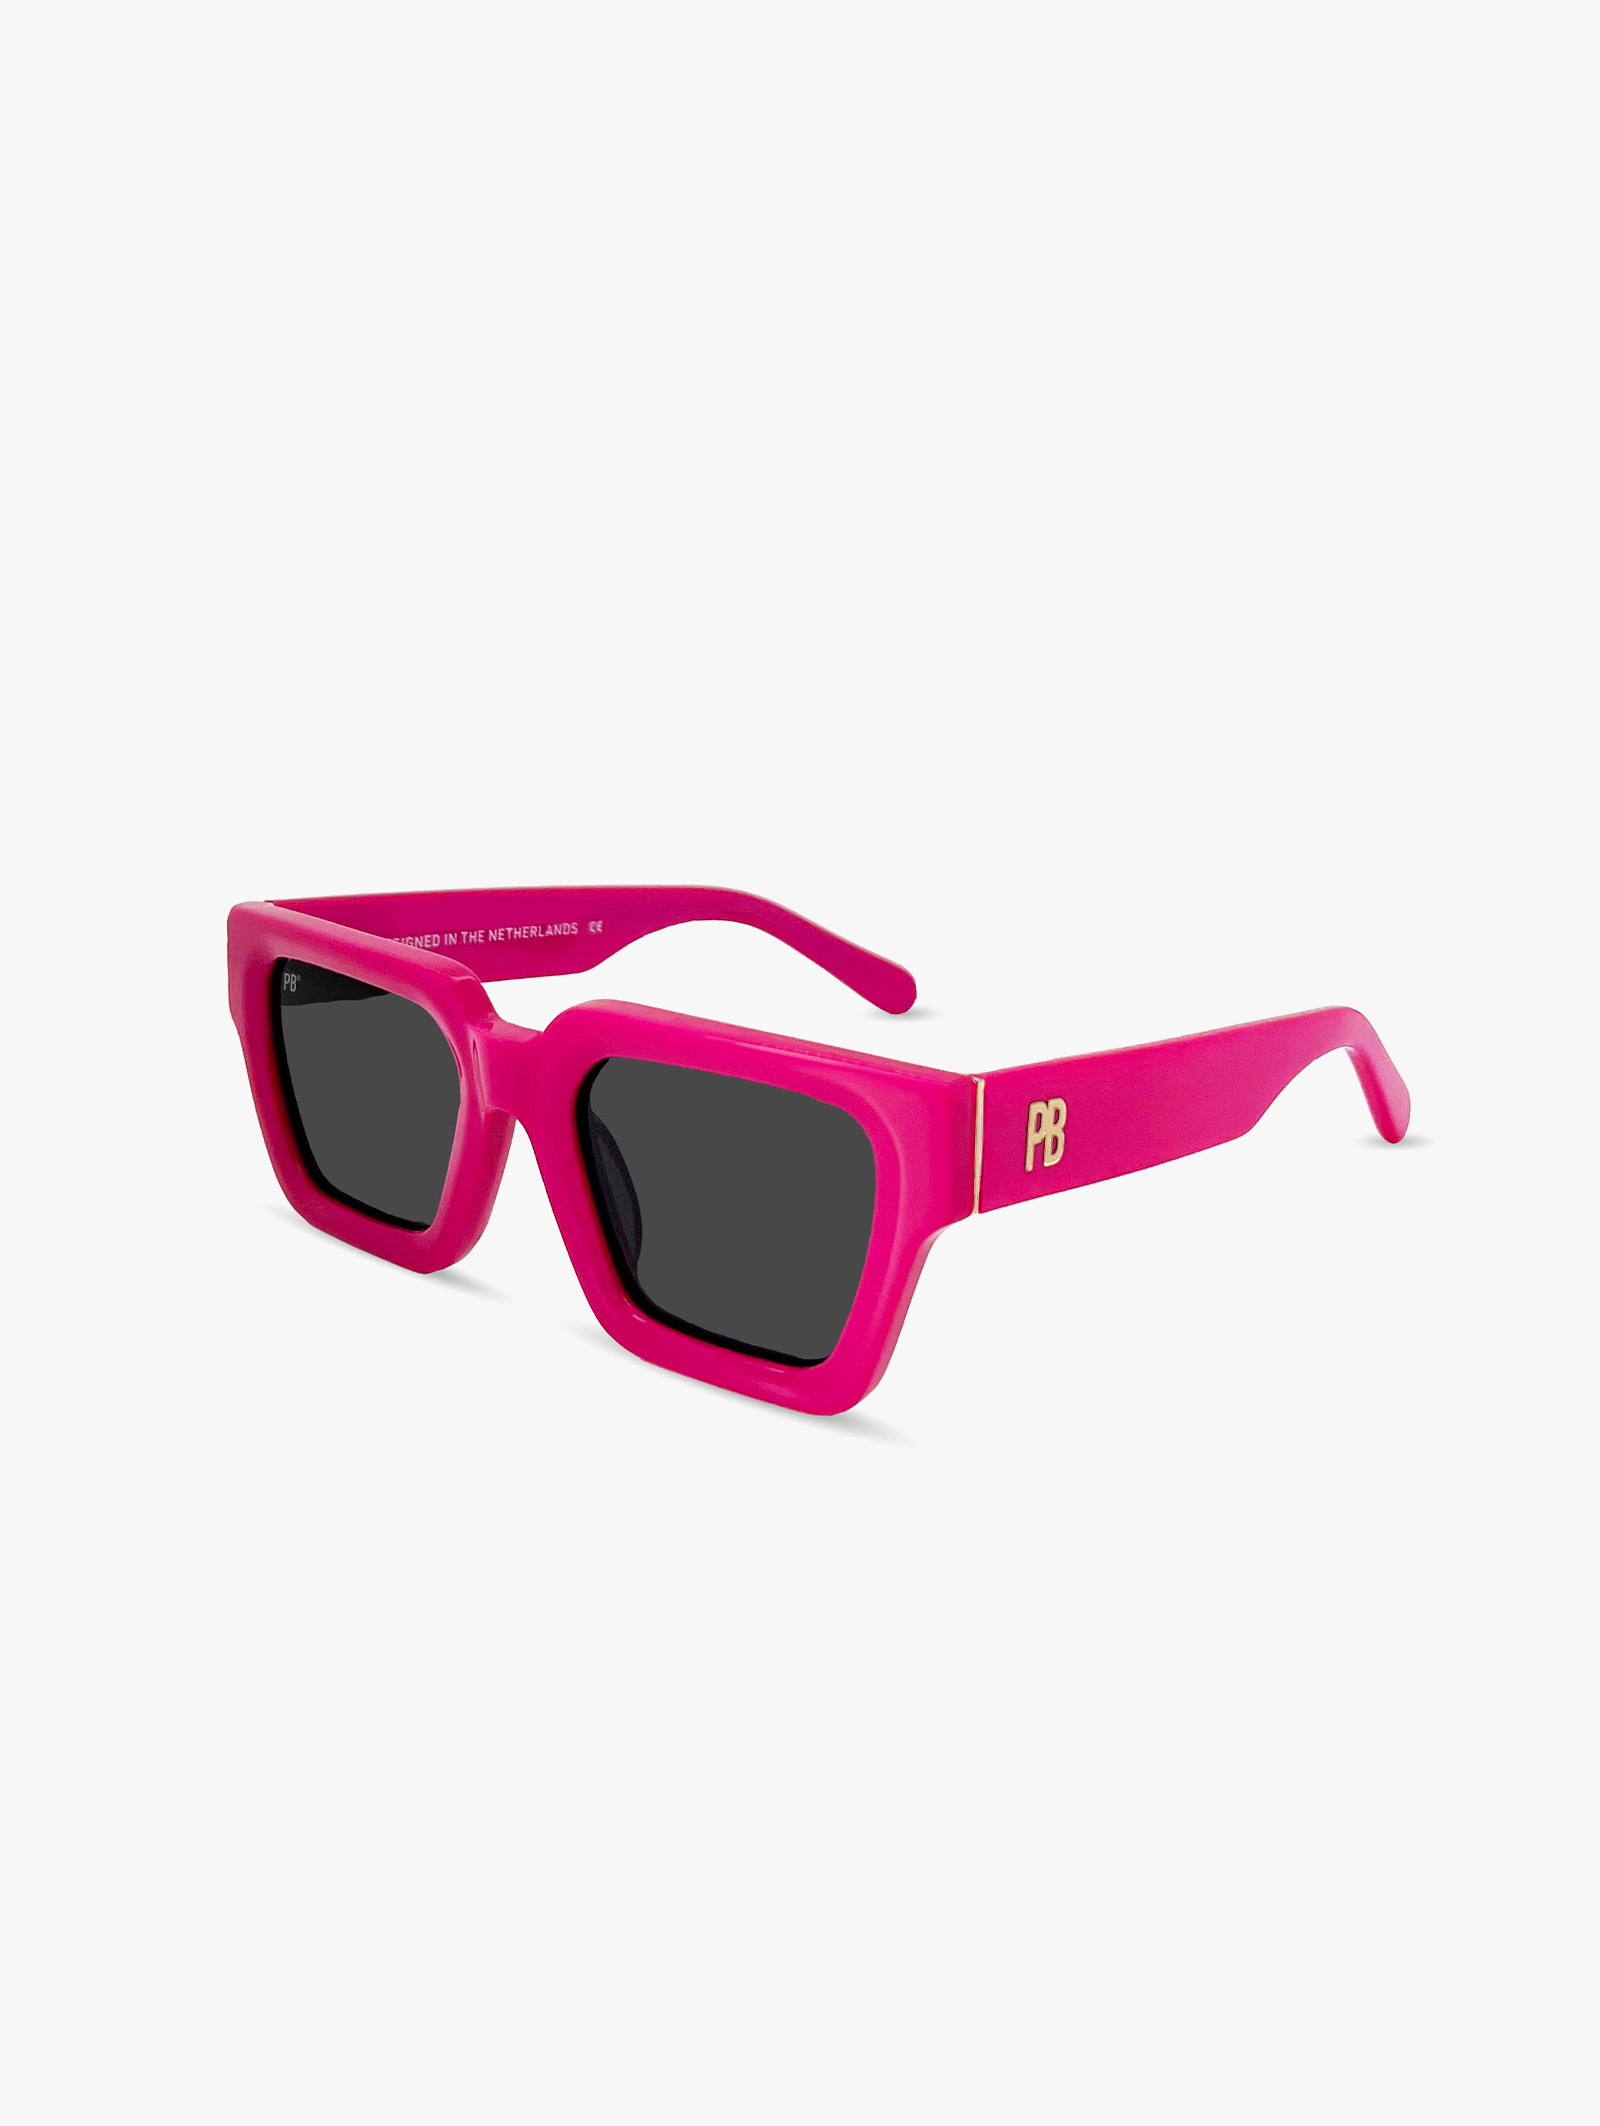 Luxor Pink Pink Sunglasses PB Sunglasses